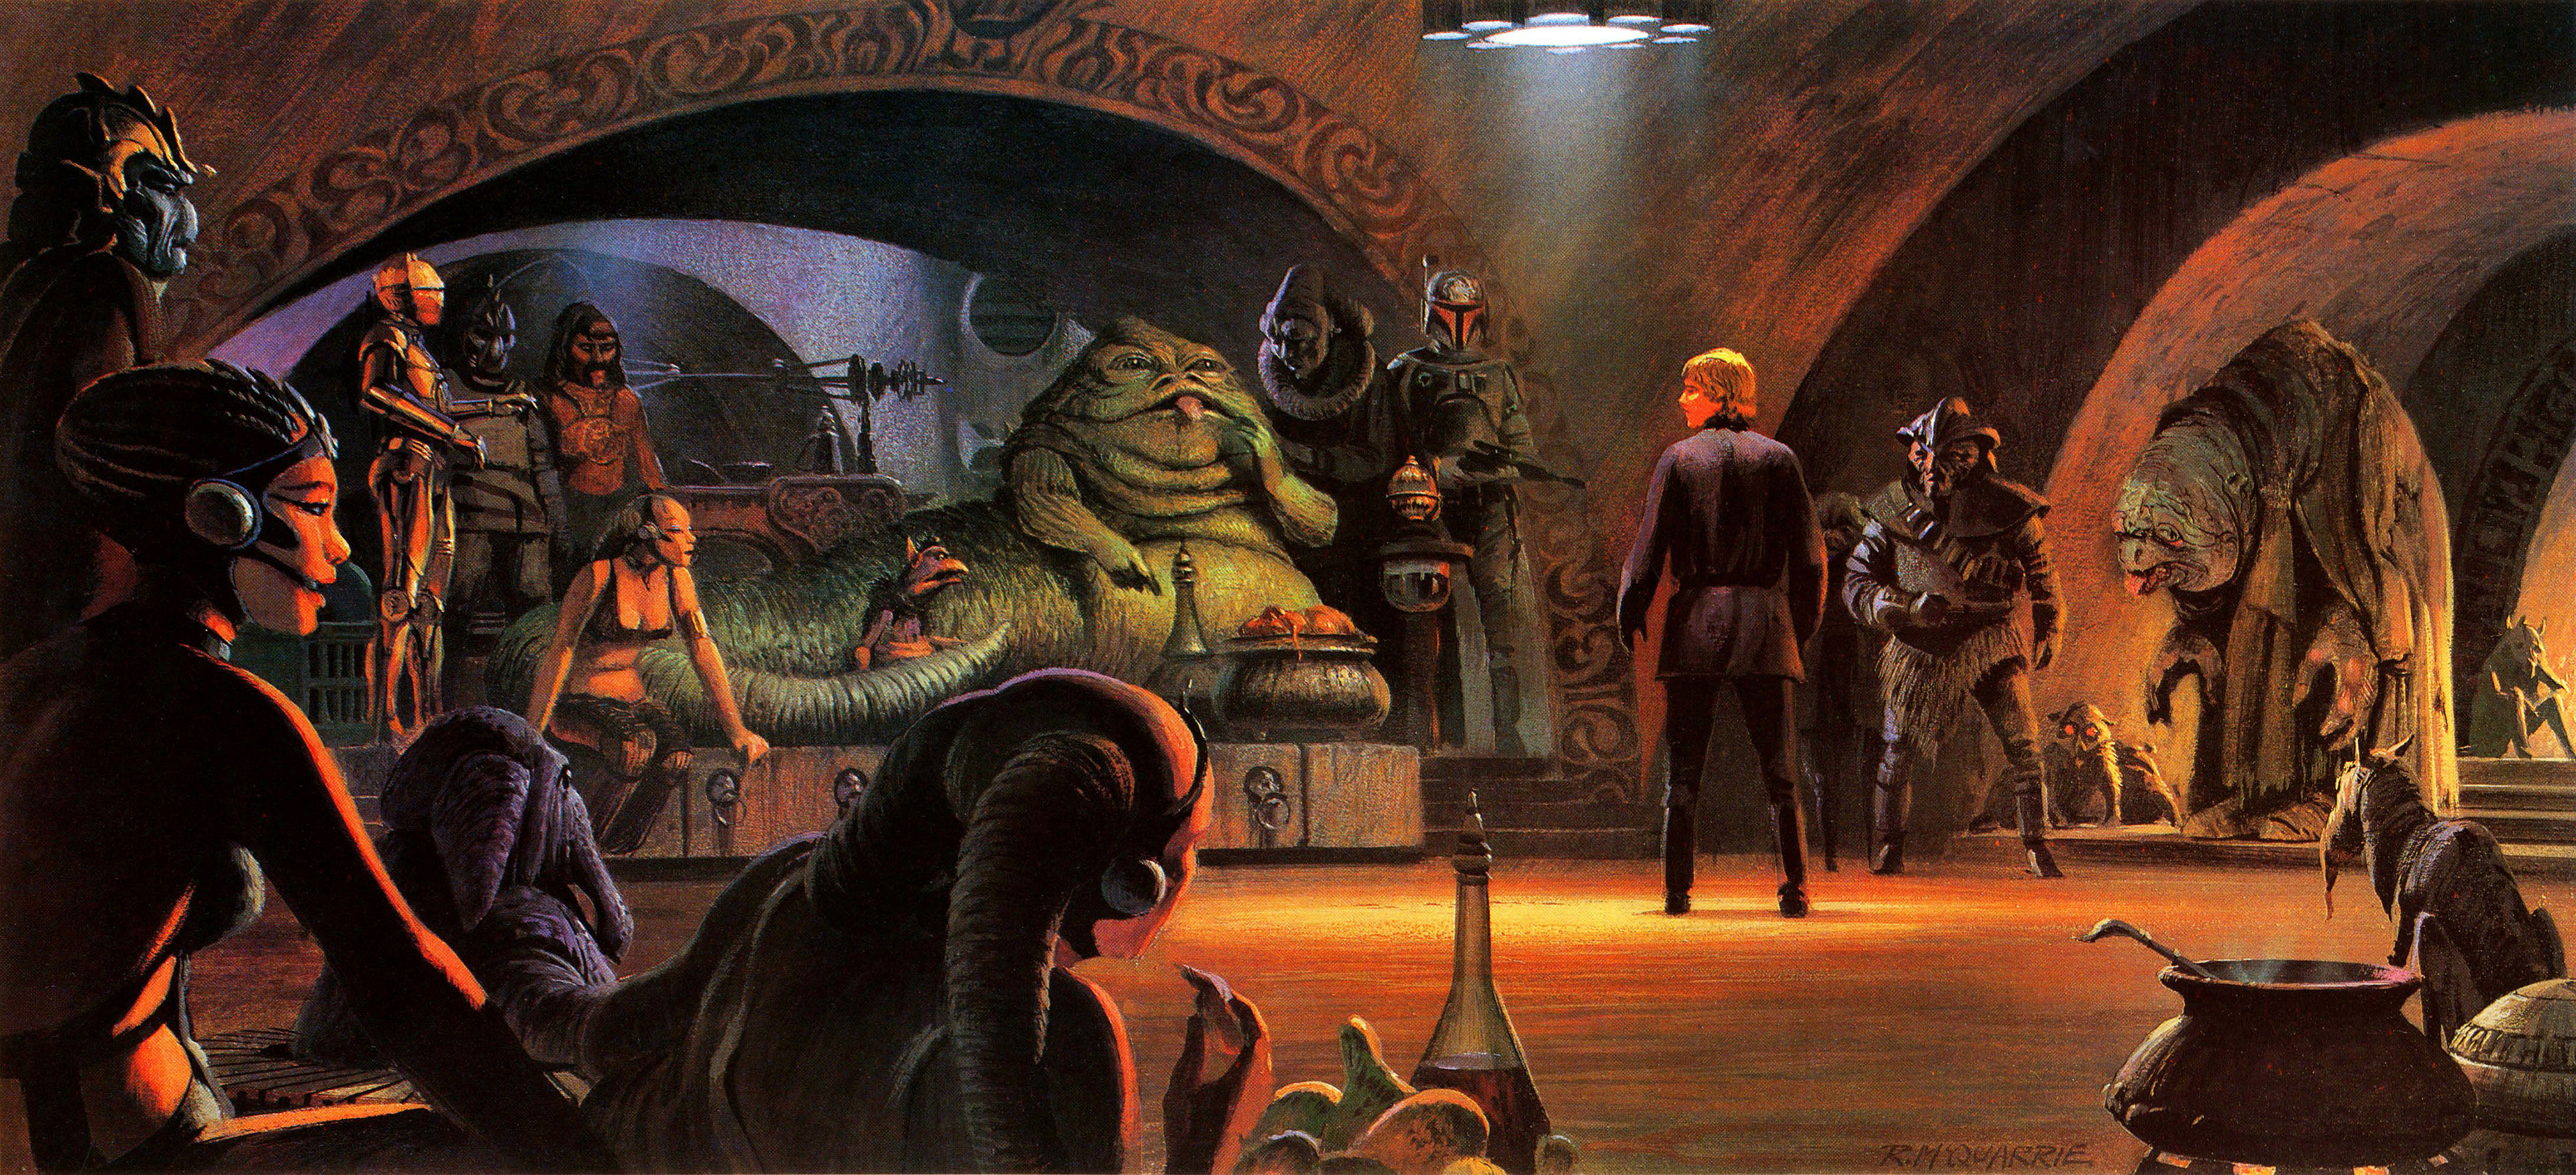 Star Wars Tatooine Luke Skywalker Jabba The Hut Boba Fett C 3PO Jabbas Palace Concept Art Ralph McQu 3840x1751